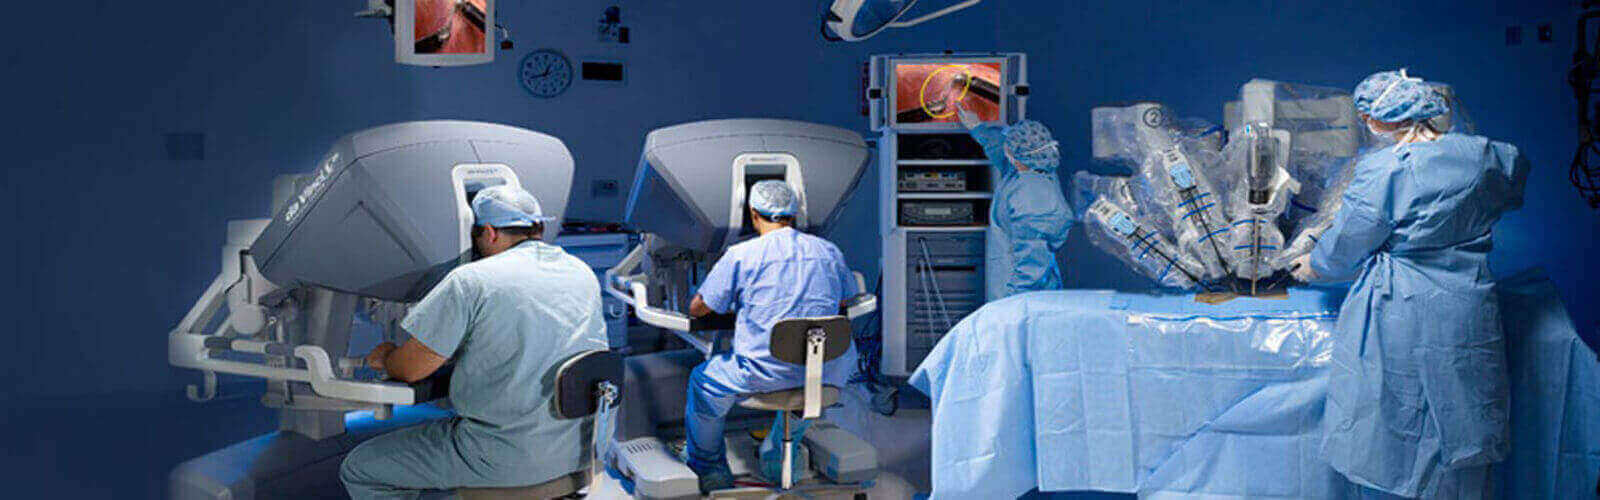 Robotic Surgery in Ontario